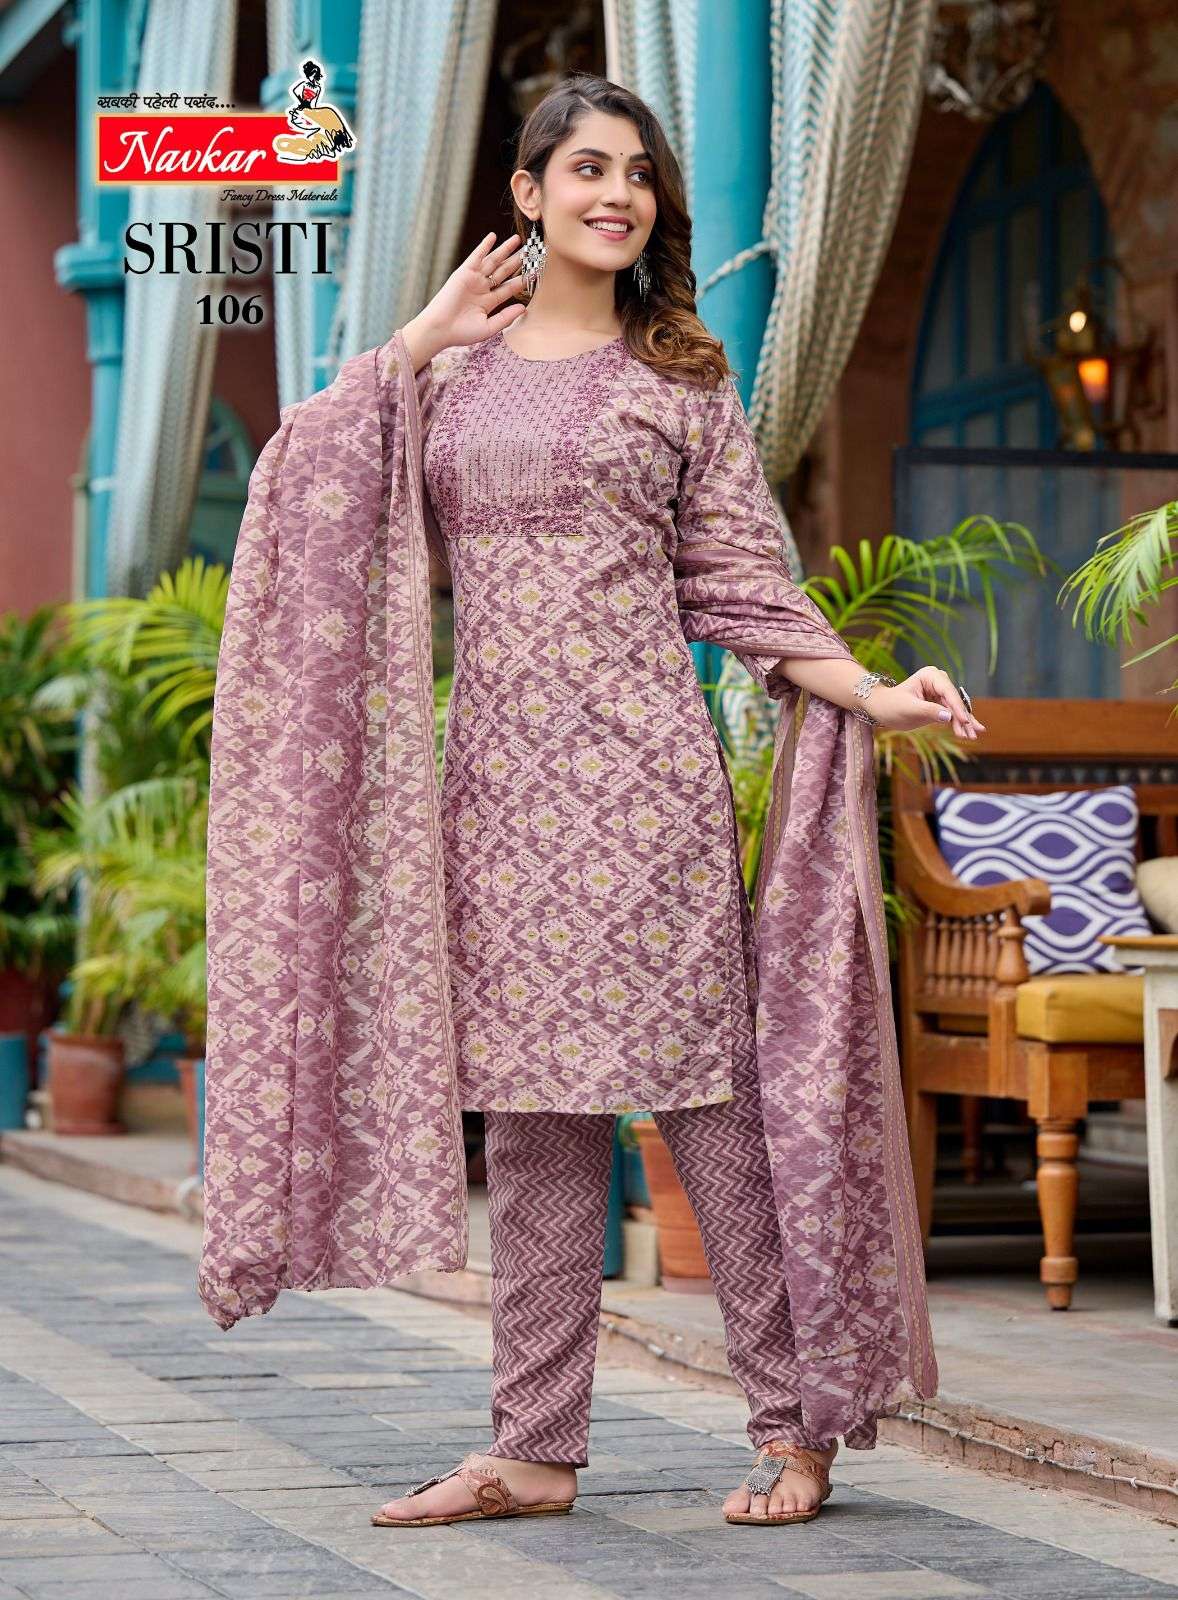 navkar sristi 101-108 series cotton designer dress readymade collection surat